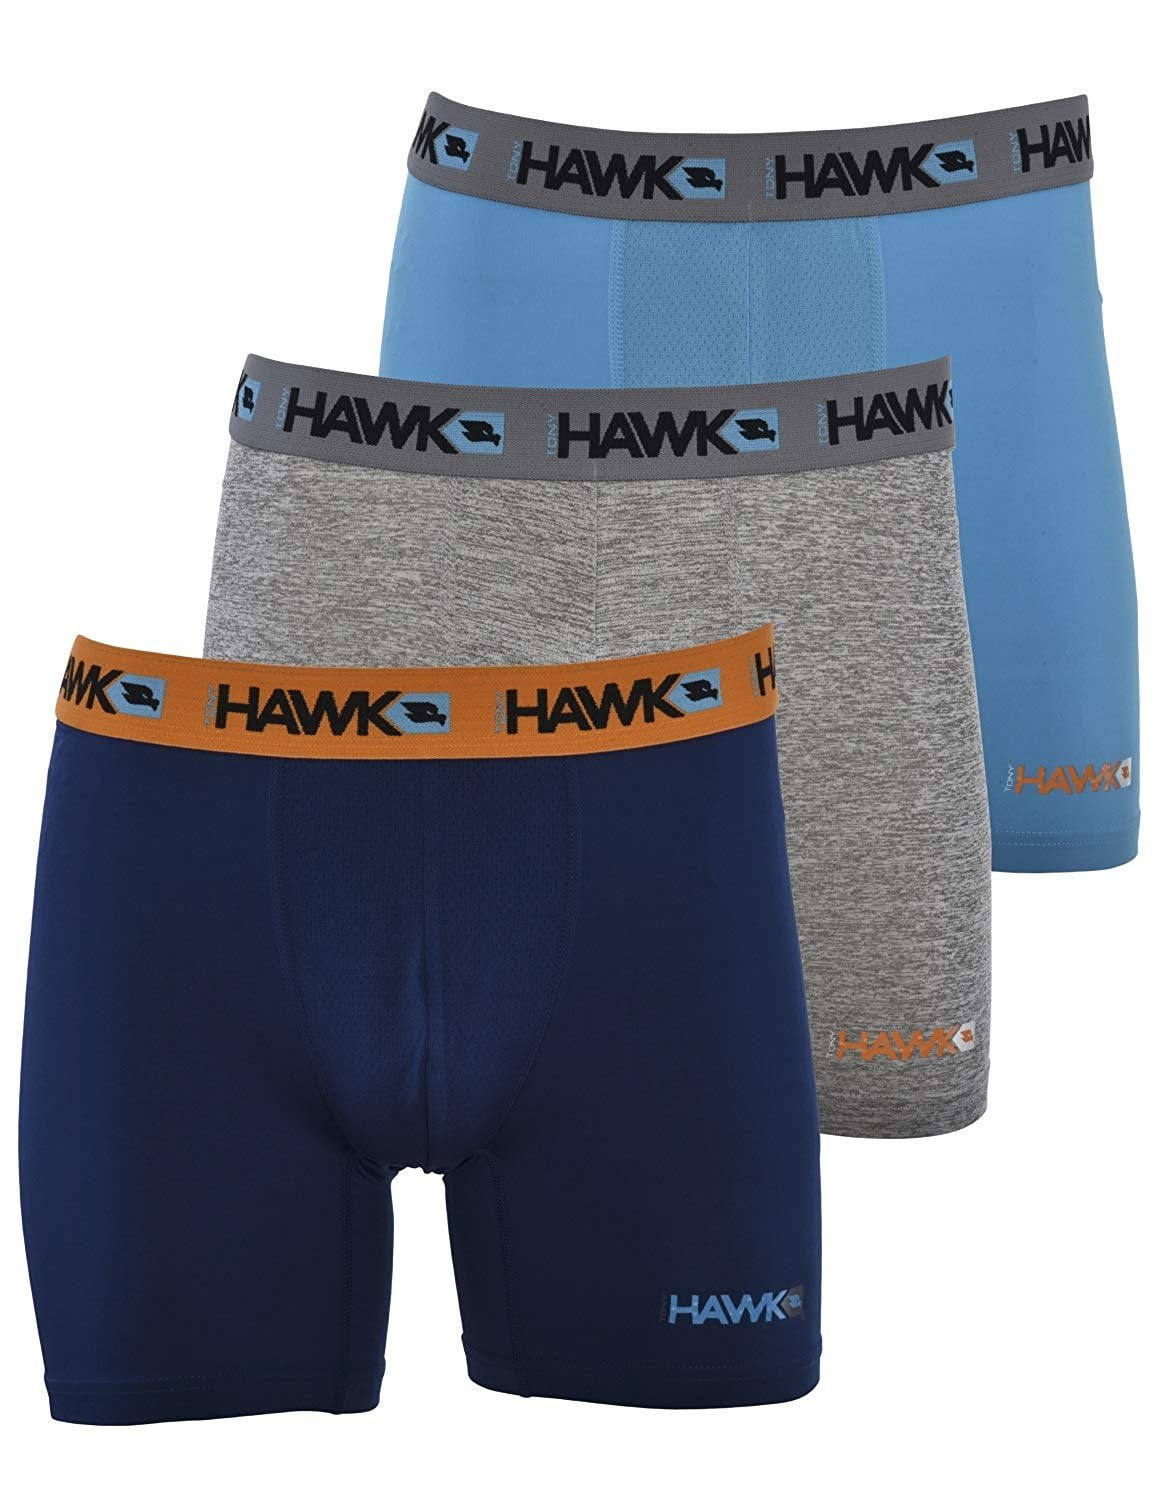 FALKE Synthetic Figure Hugging Brief in Black Blue for Men Mens Clothing Underwear Boxers briefs 